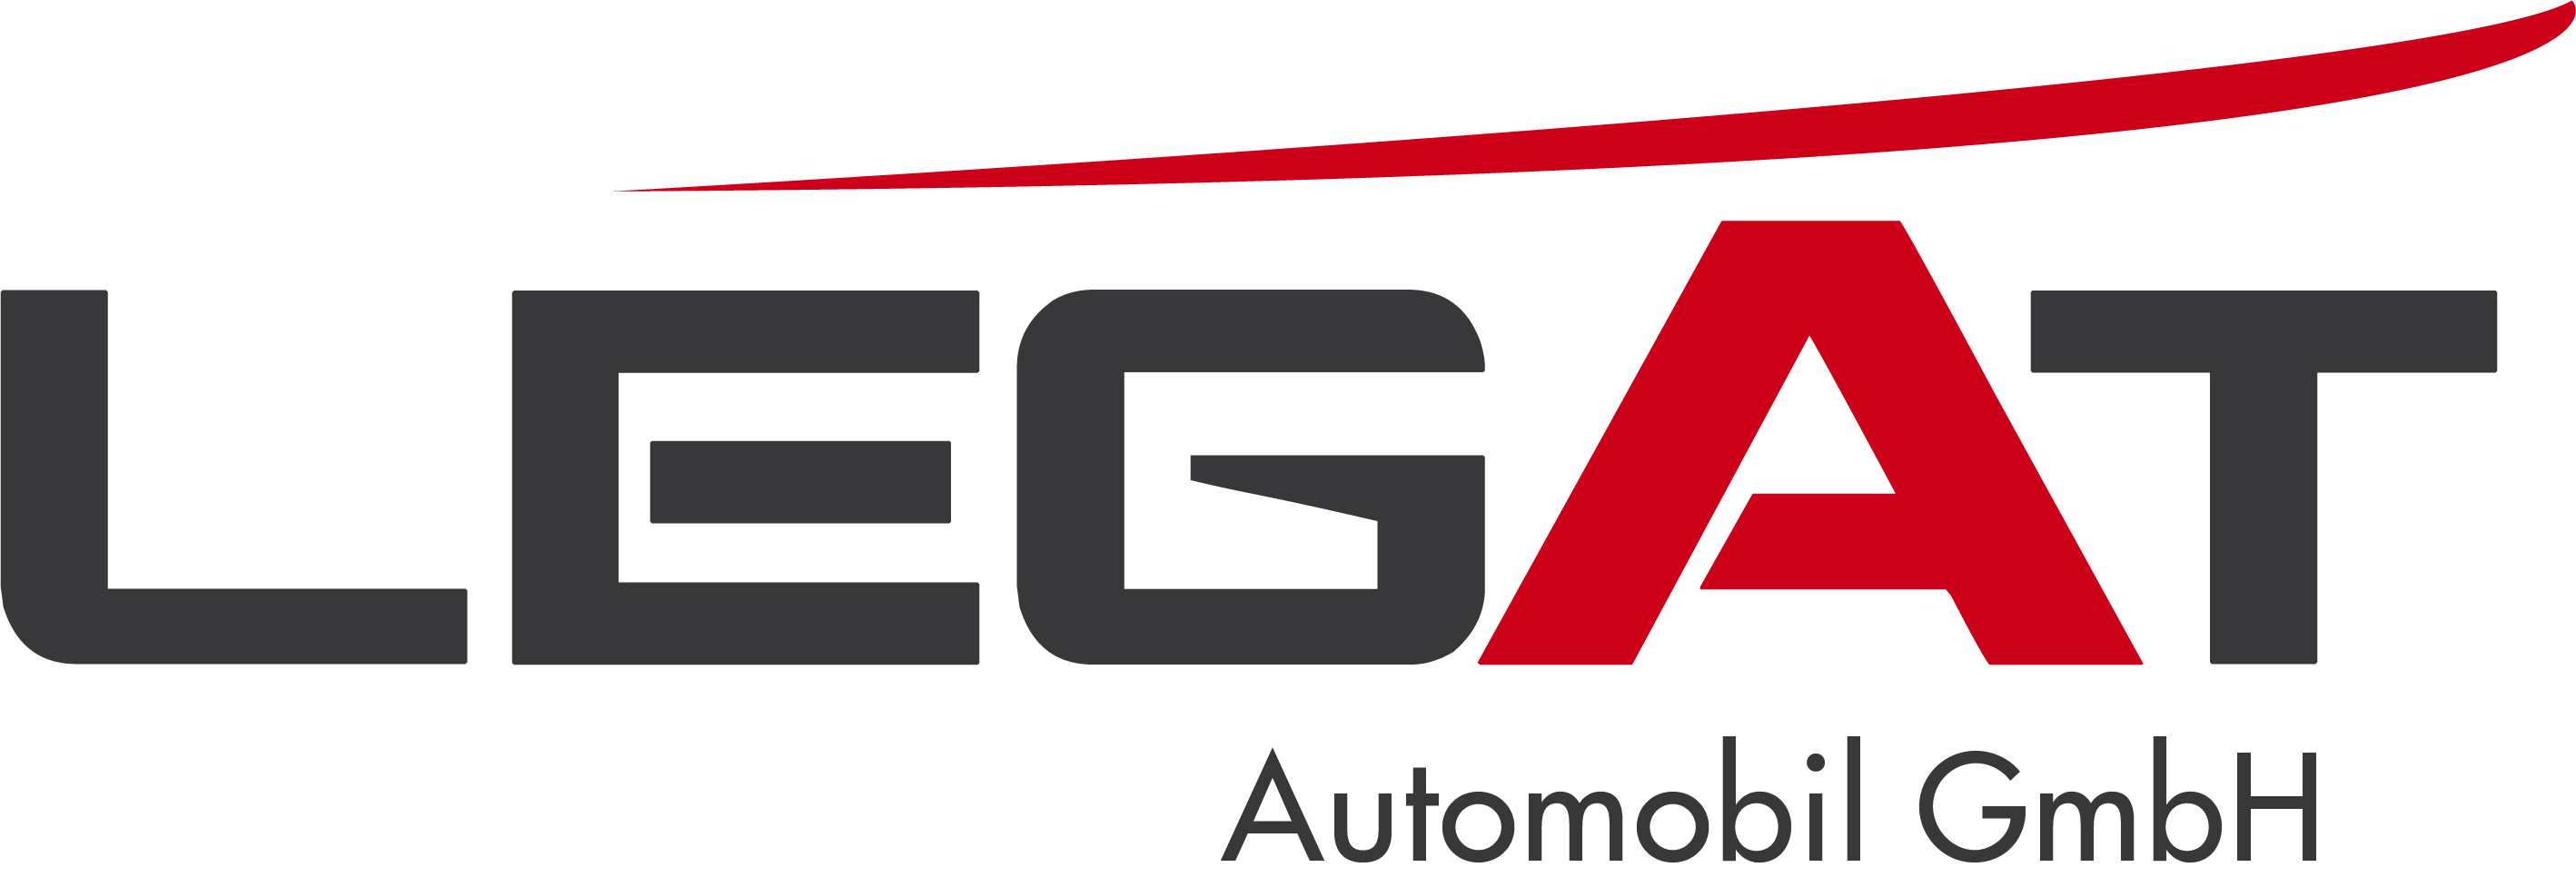 Legat Automobil GmbH